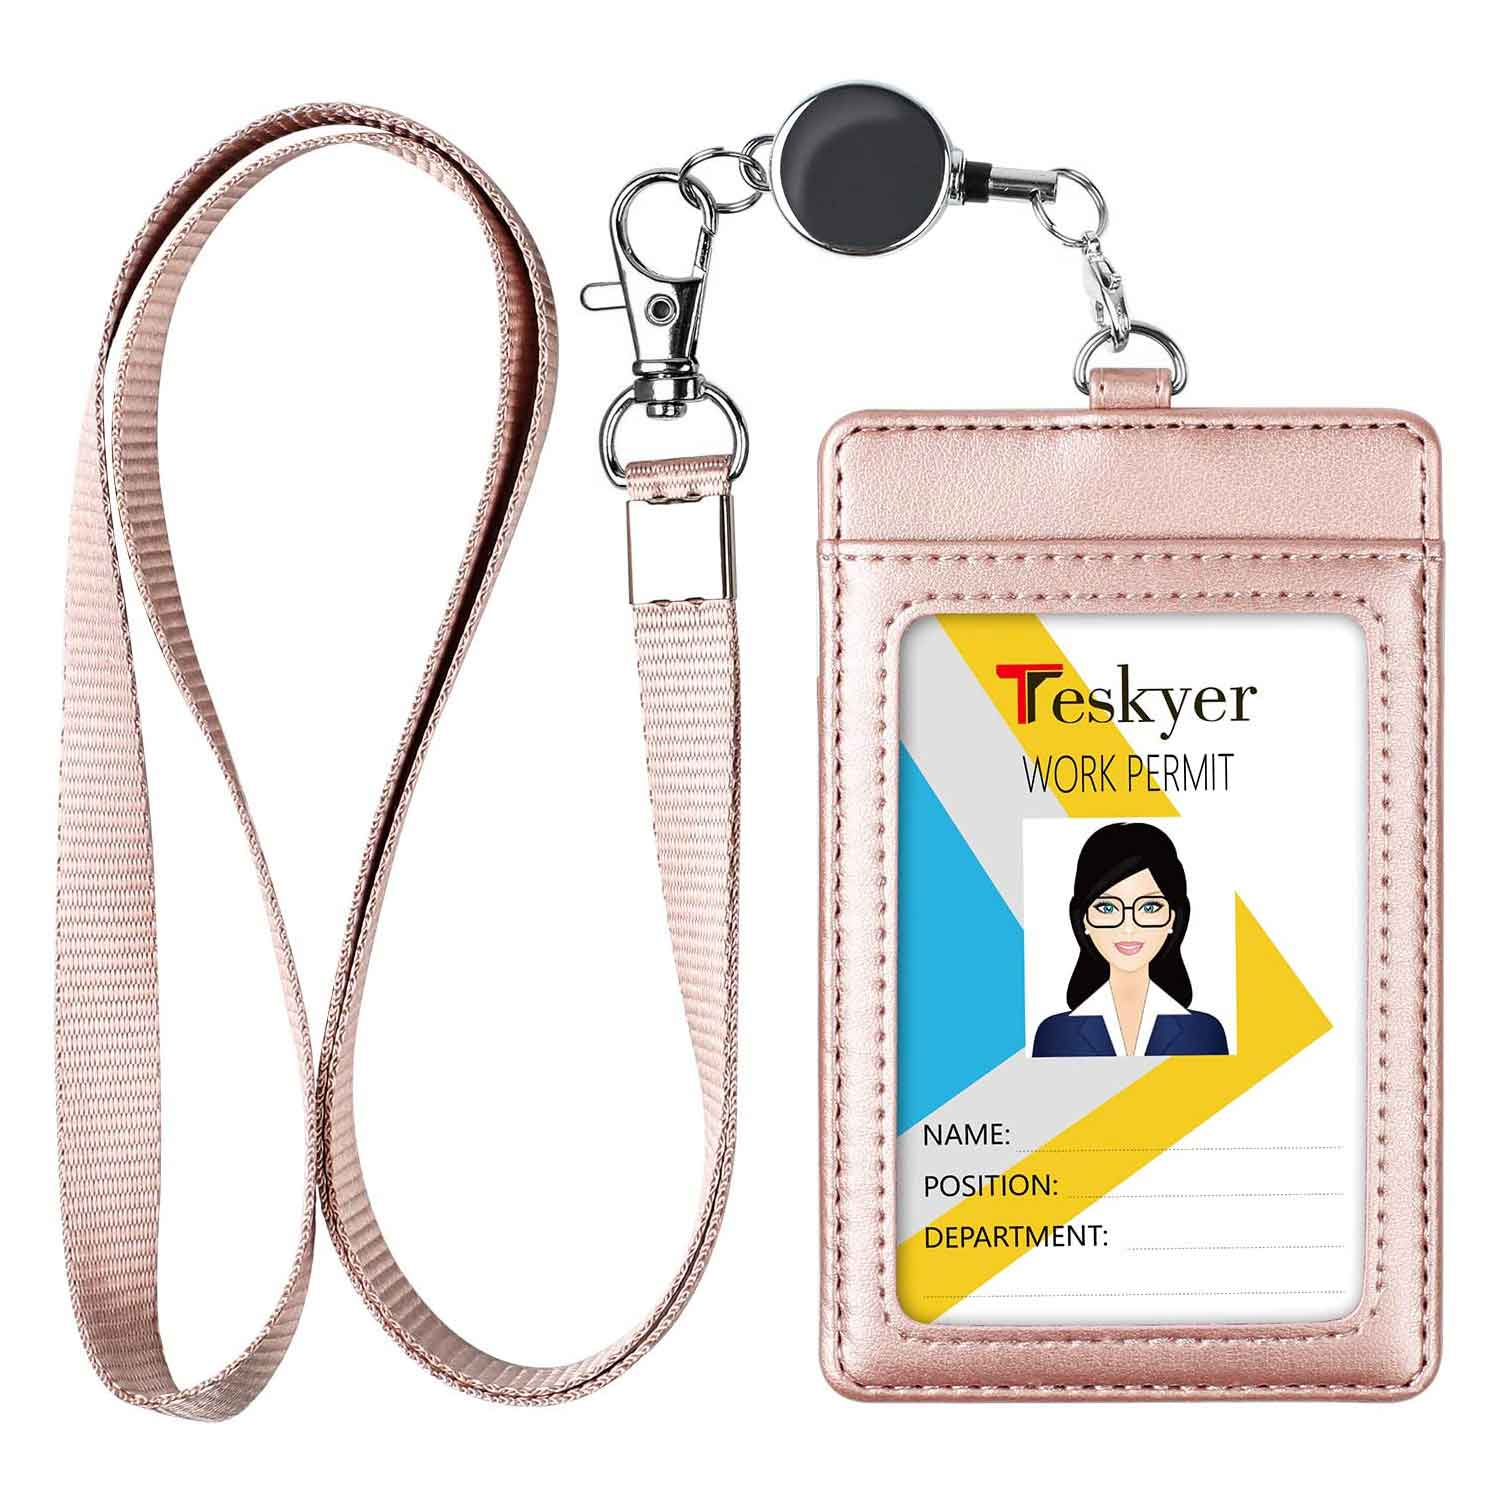 ELV Badge Holder, PU Leather ID Badge Card Holder Wallet with 5